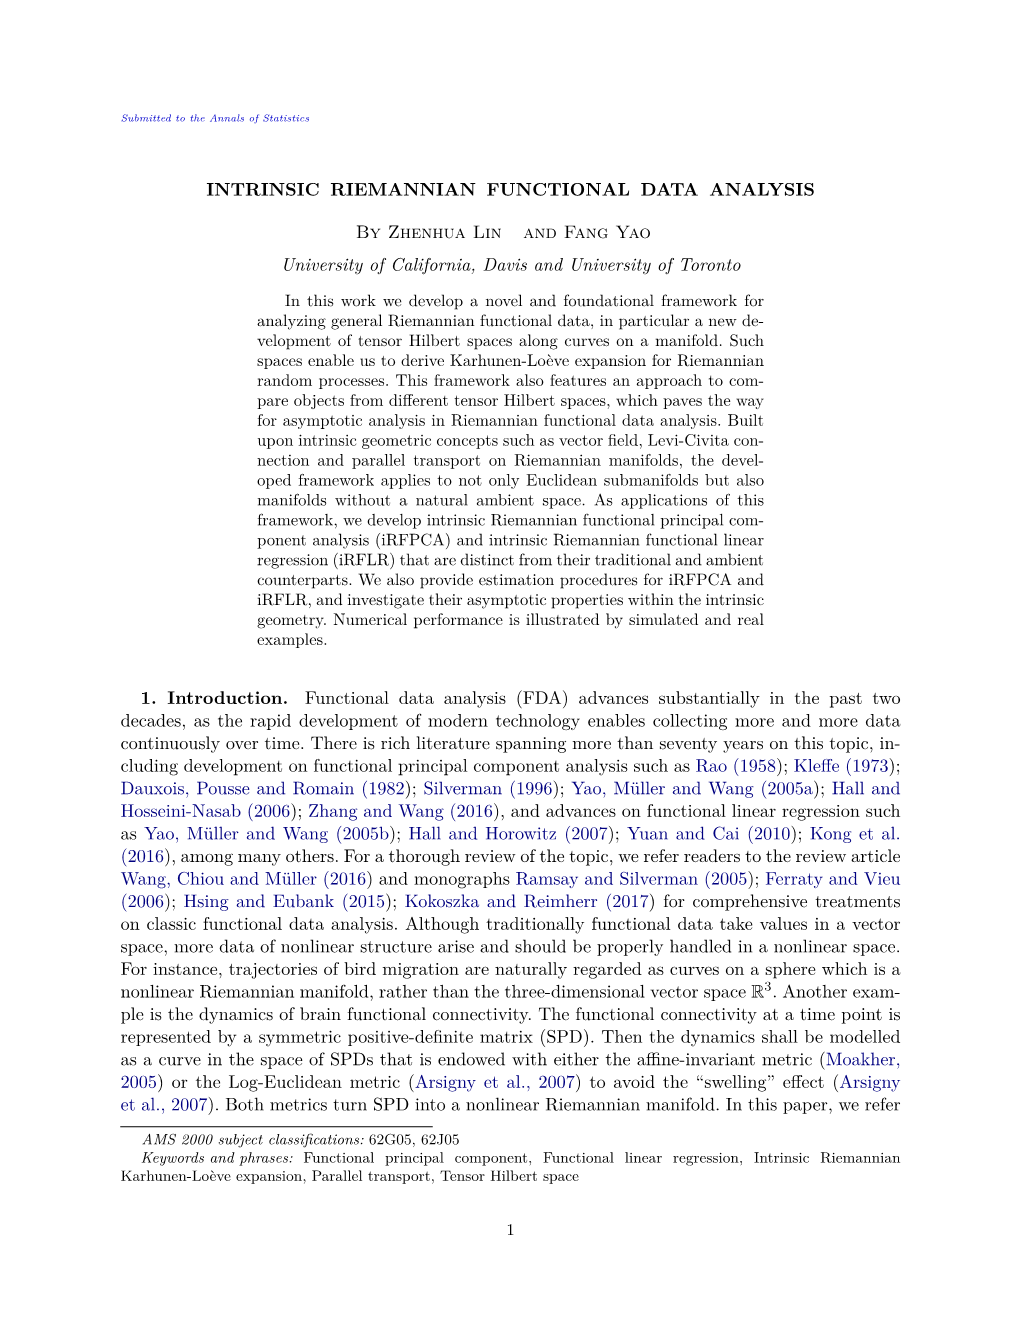 Intrinsic Riemannian Functional Data Analysis